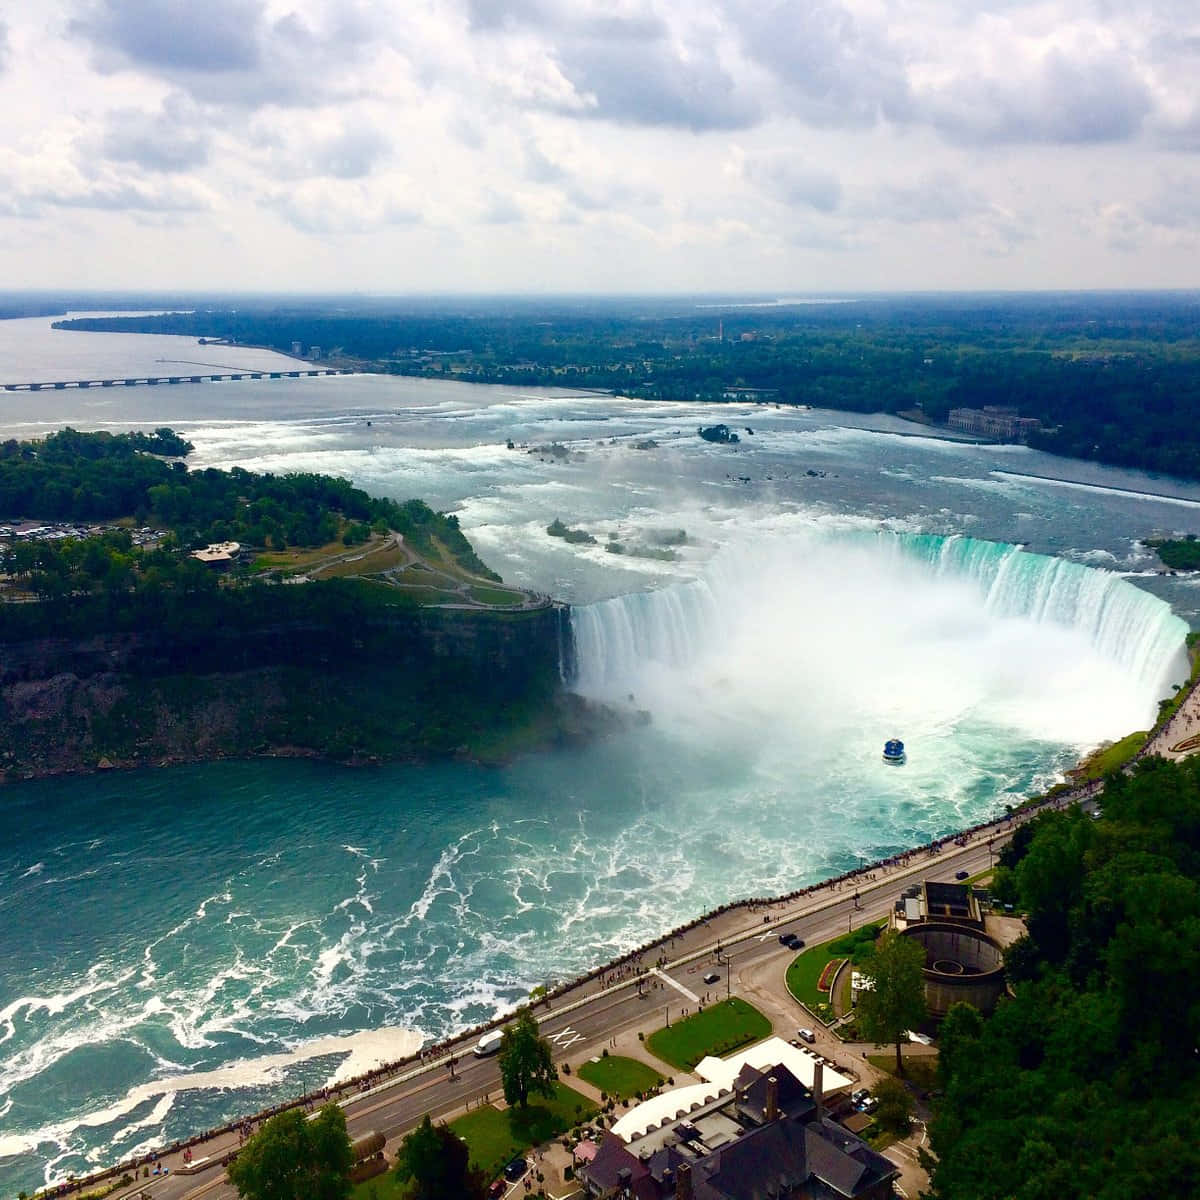 “The breathtaking beauty of Niagara Falls”